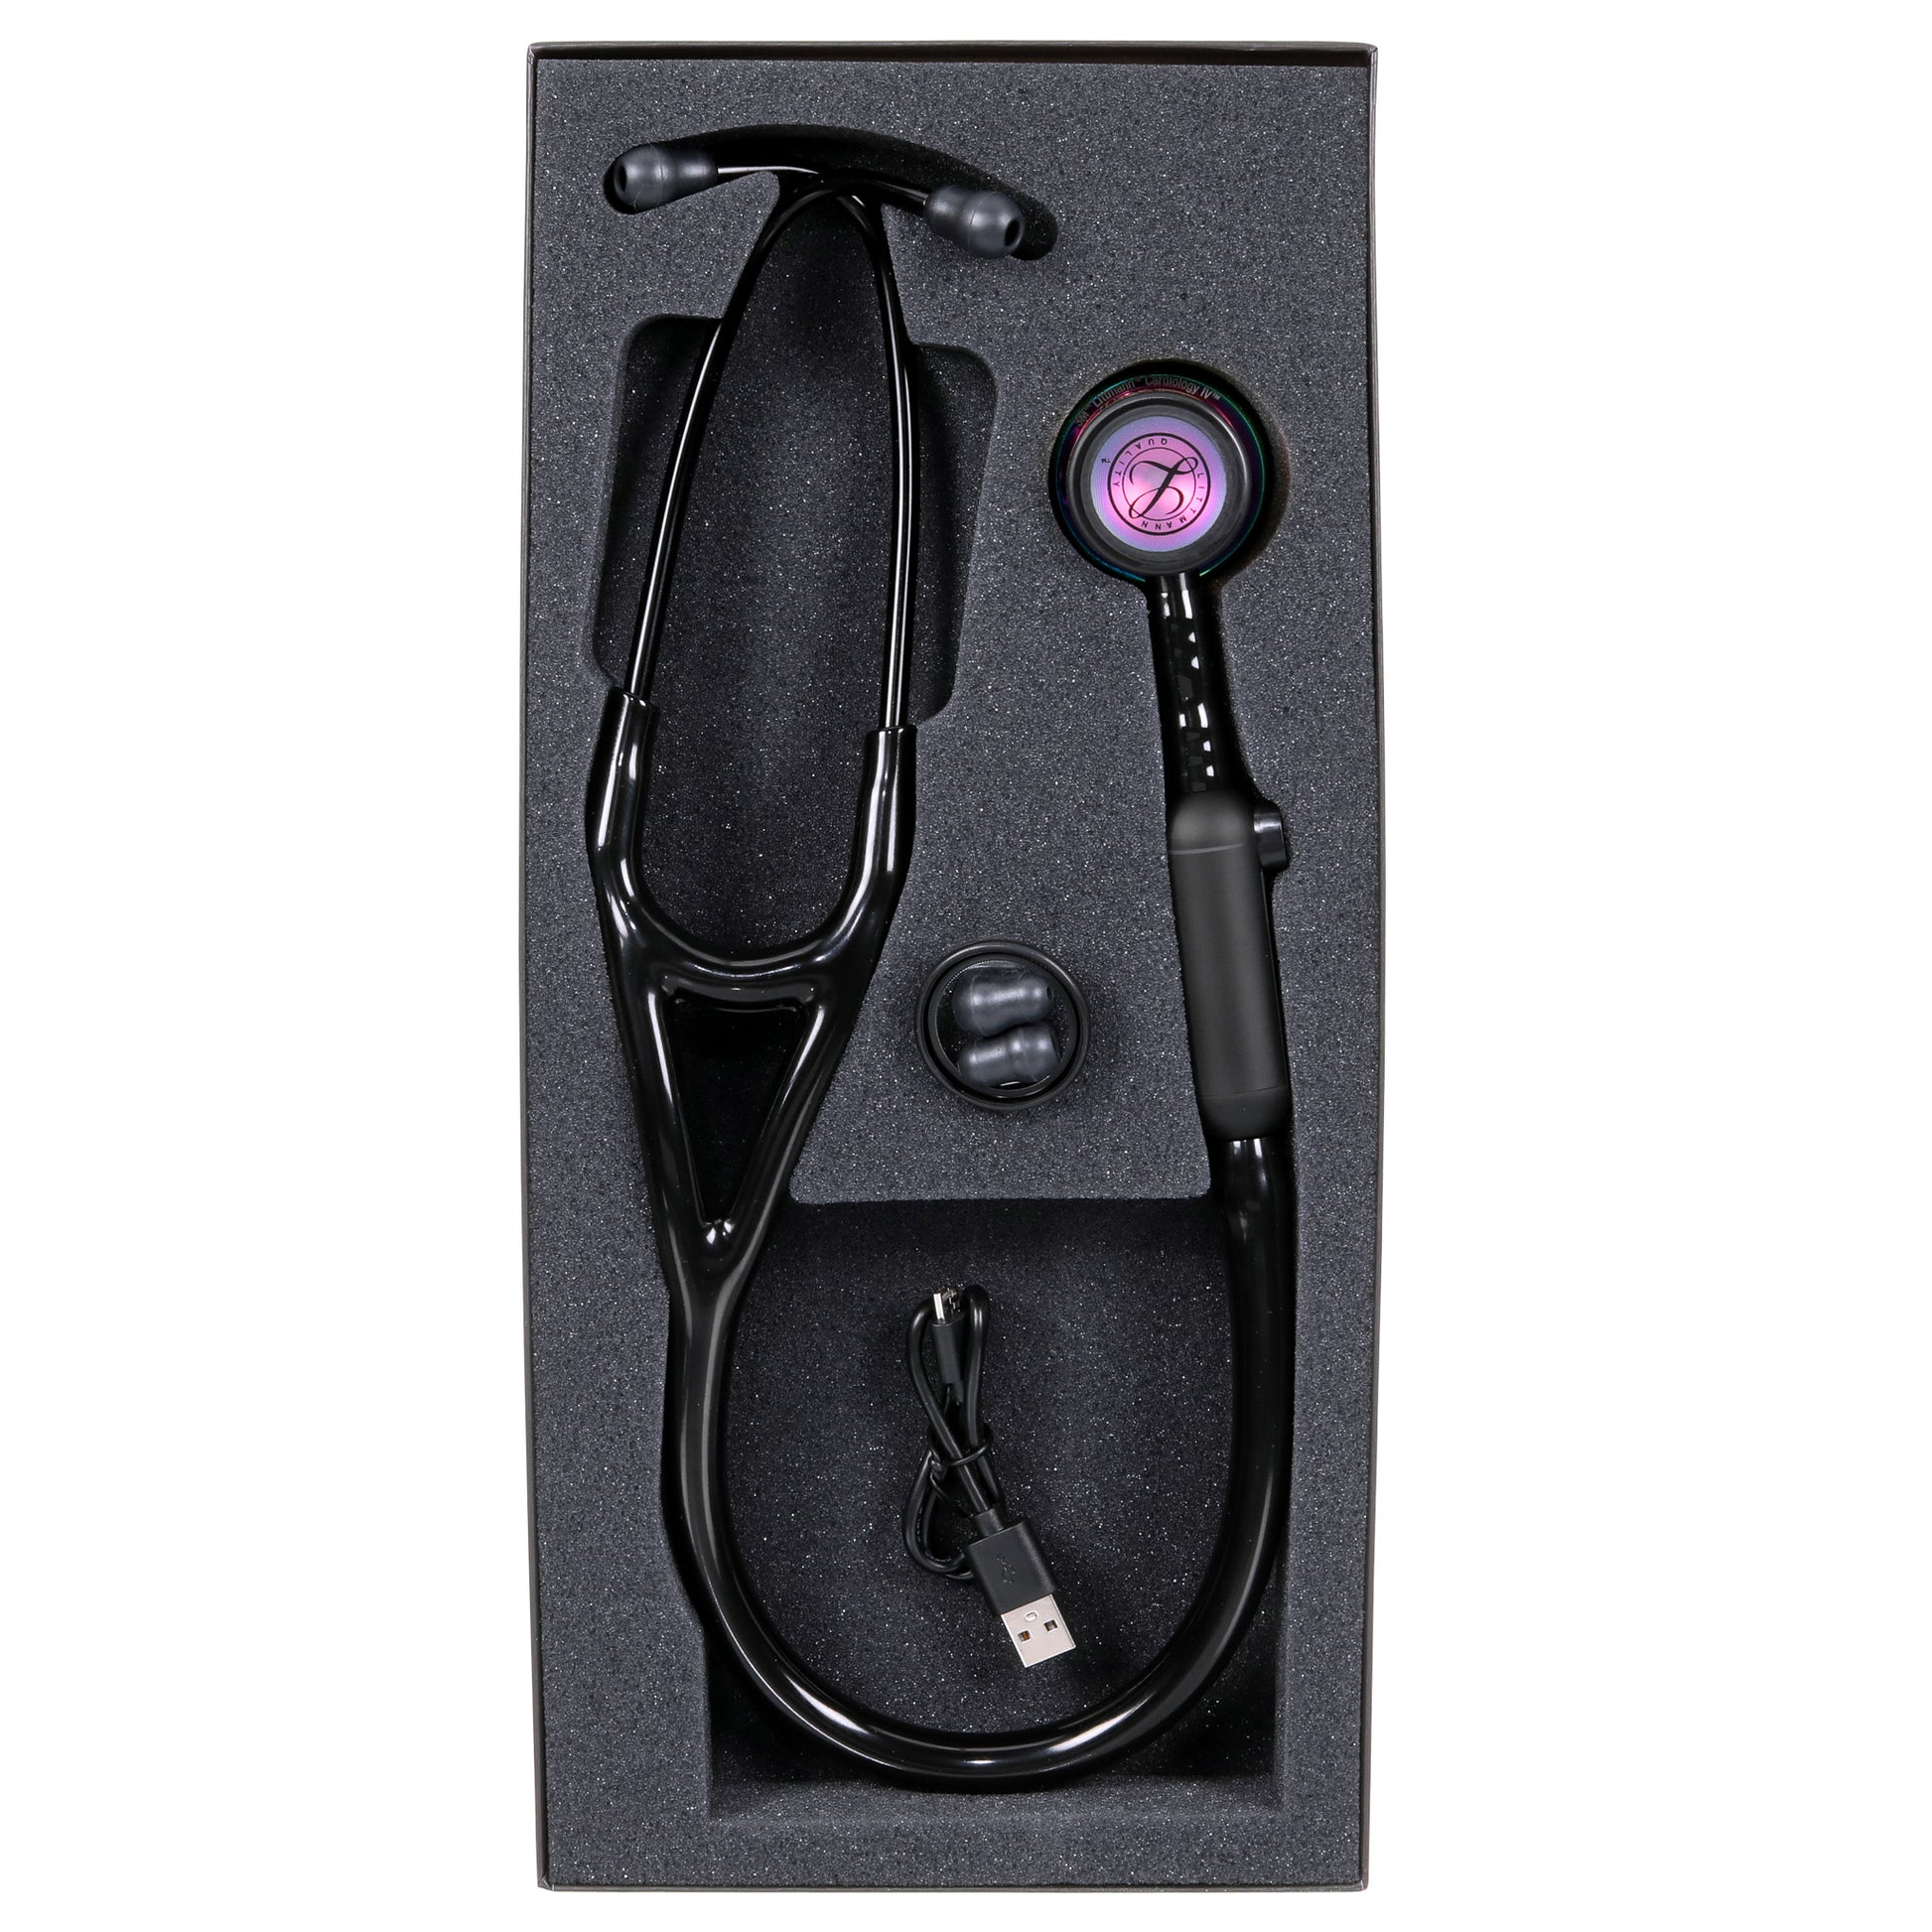 3M Littmann CORE Digital Stethoscope - Black (8570) for sale